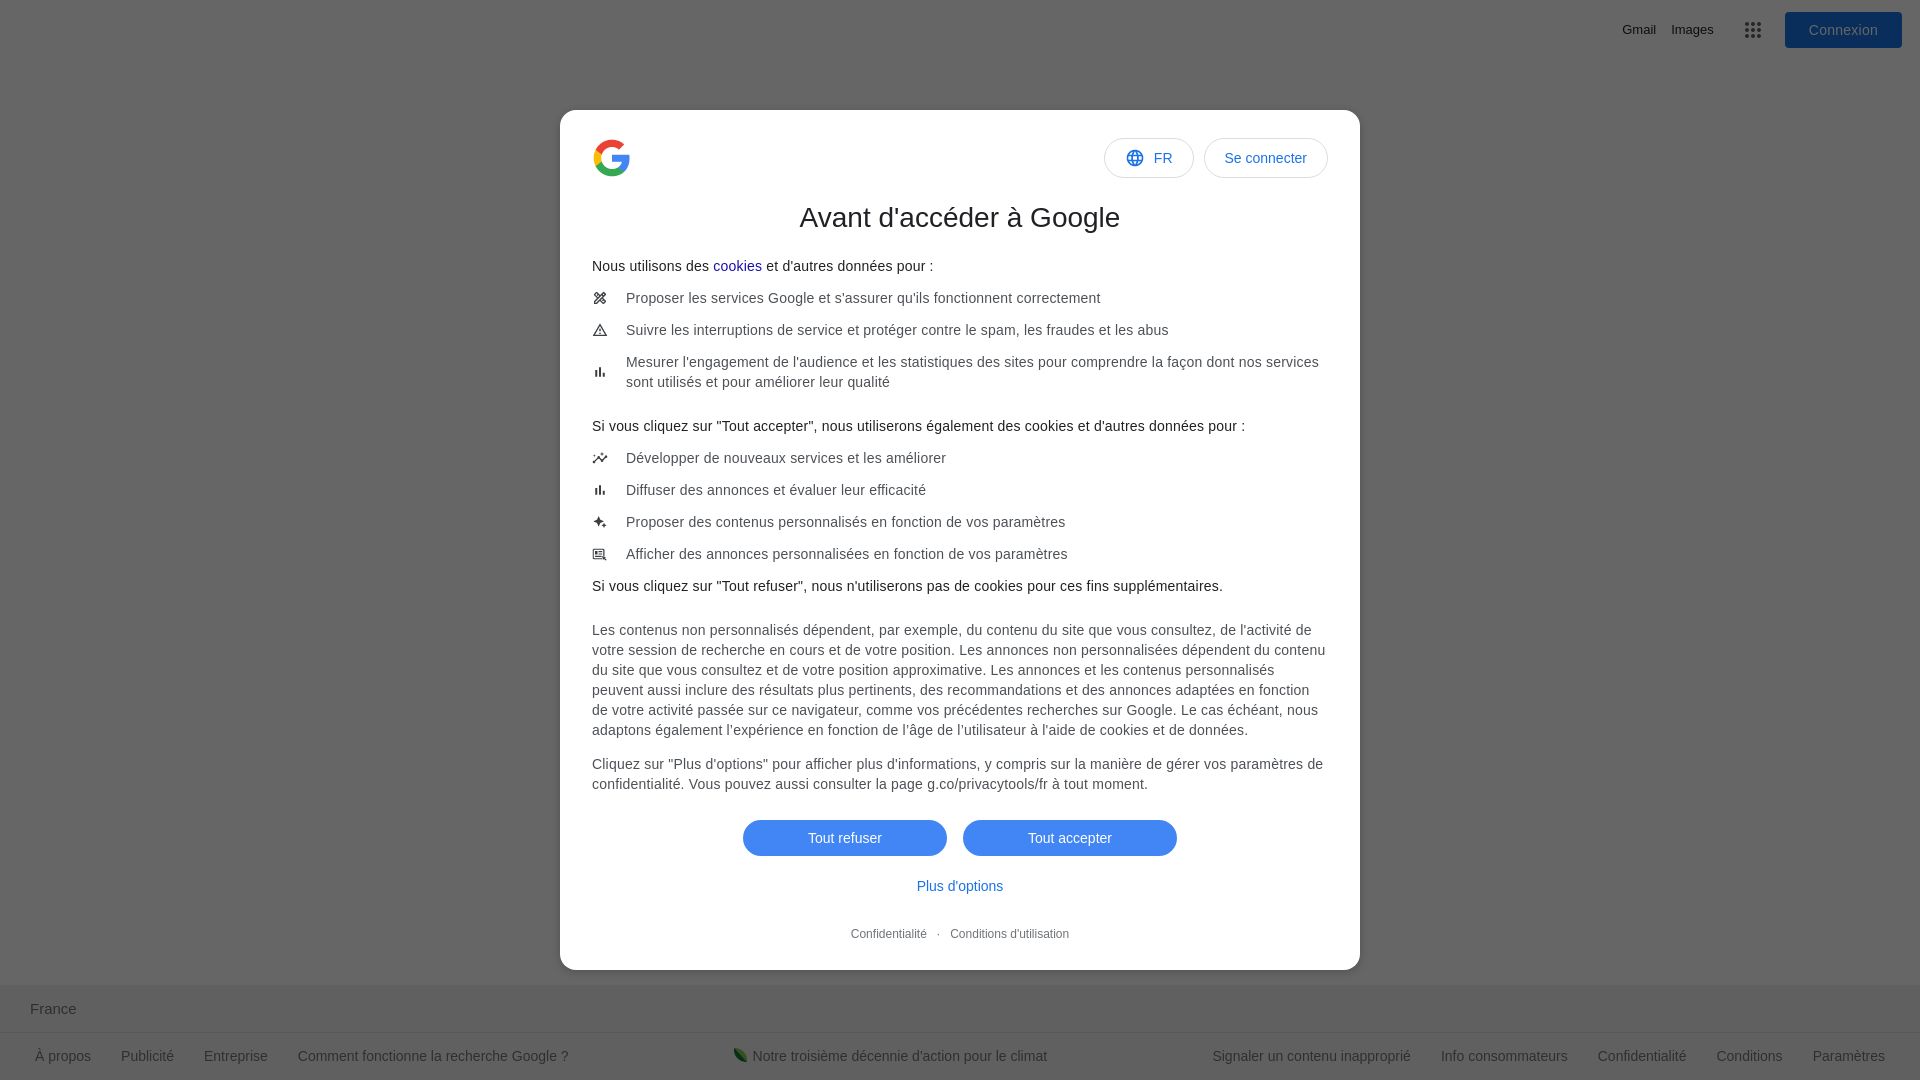 Website status google.fr is   ONLINE